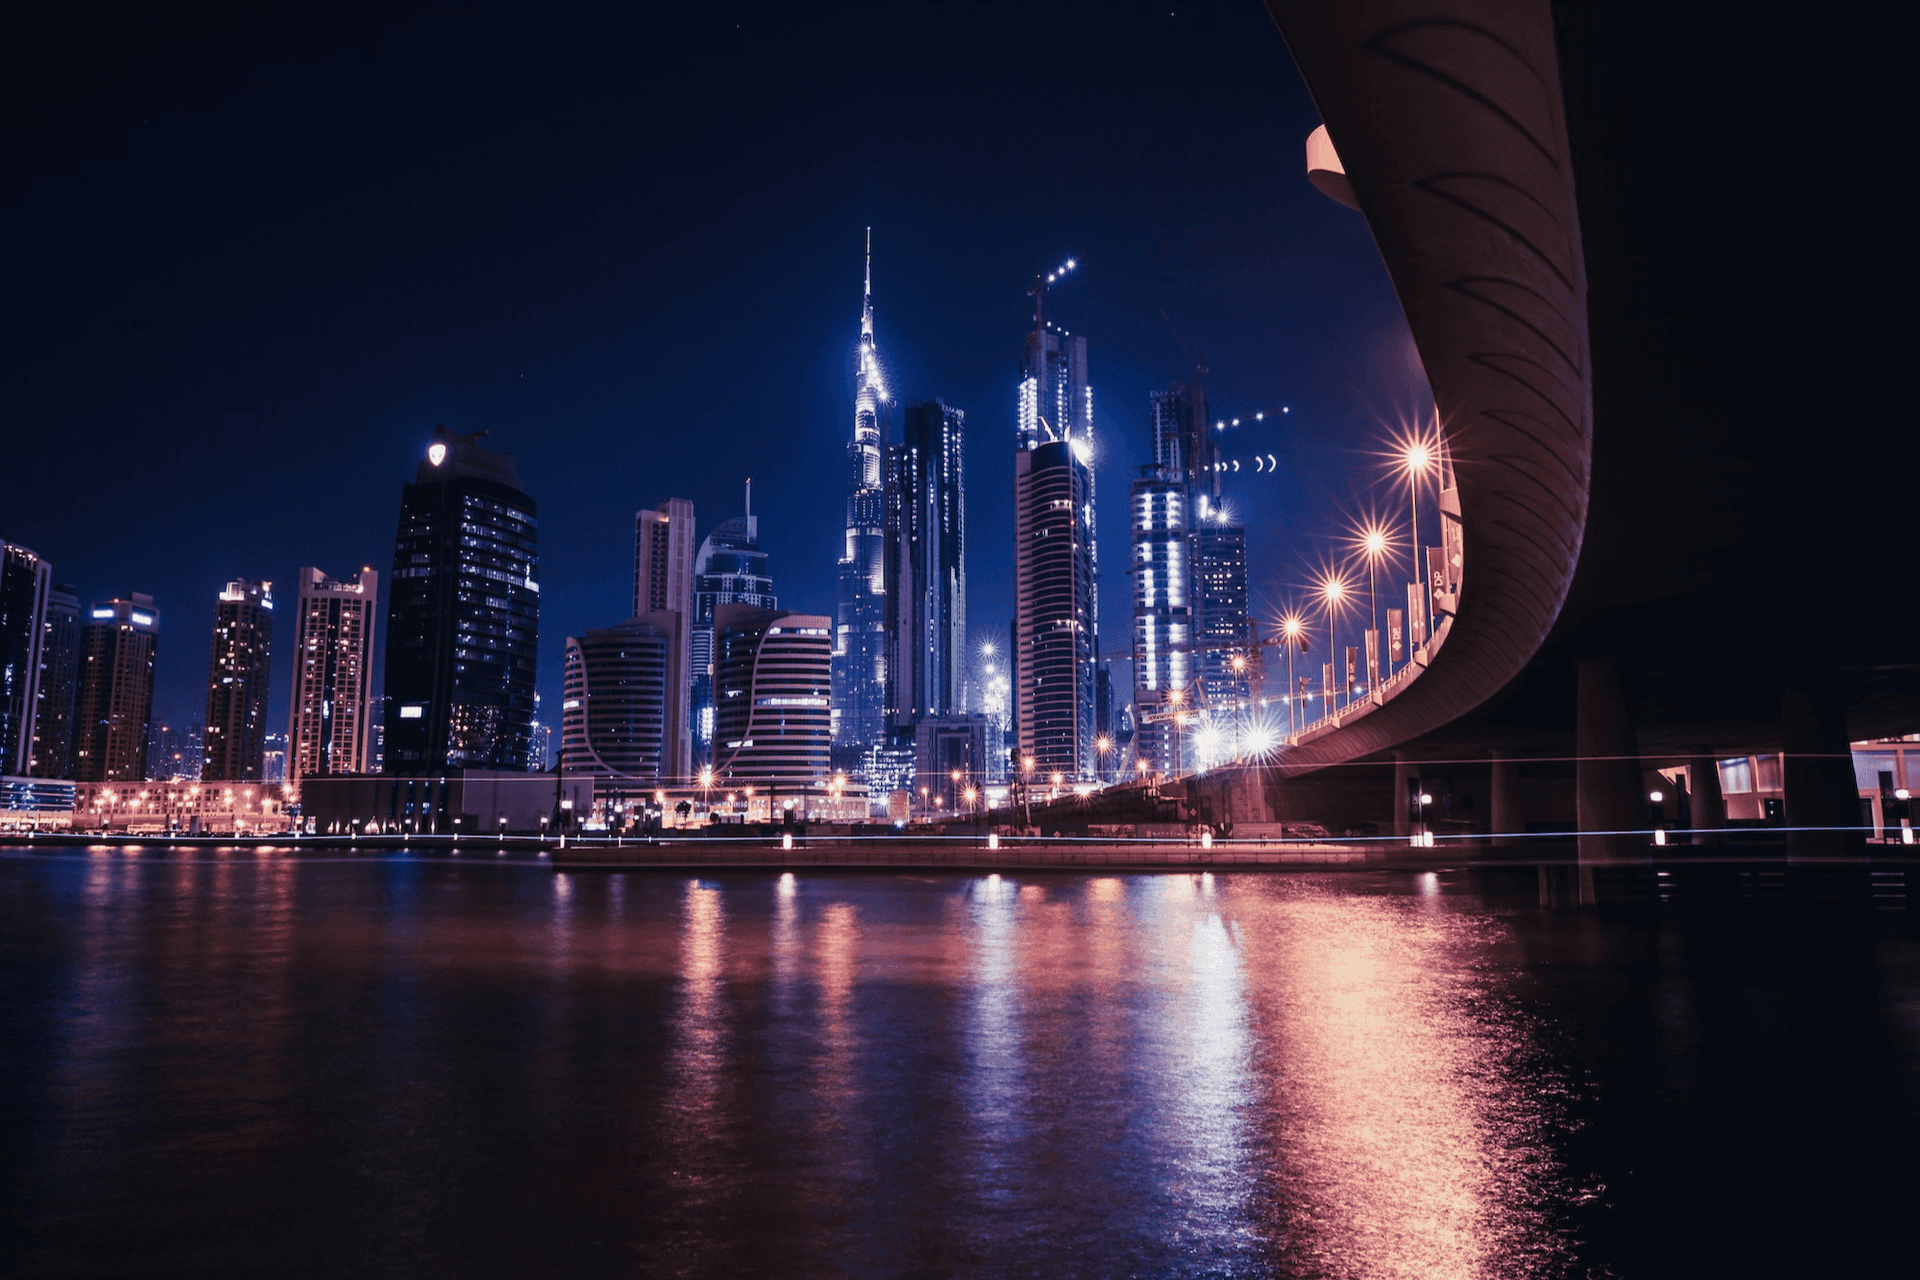 The night city of Dubai in United States of Emirates